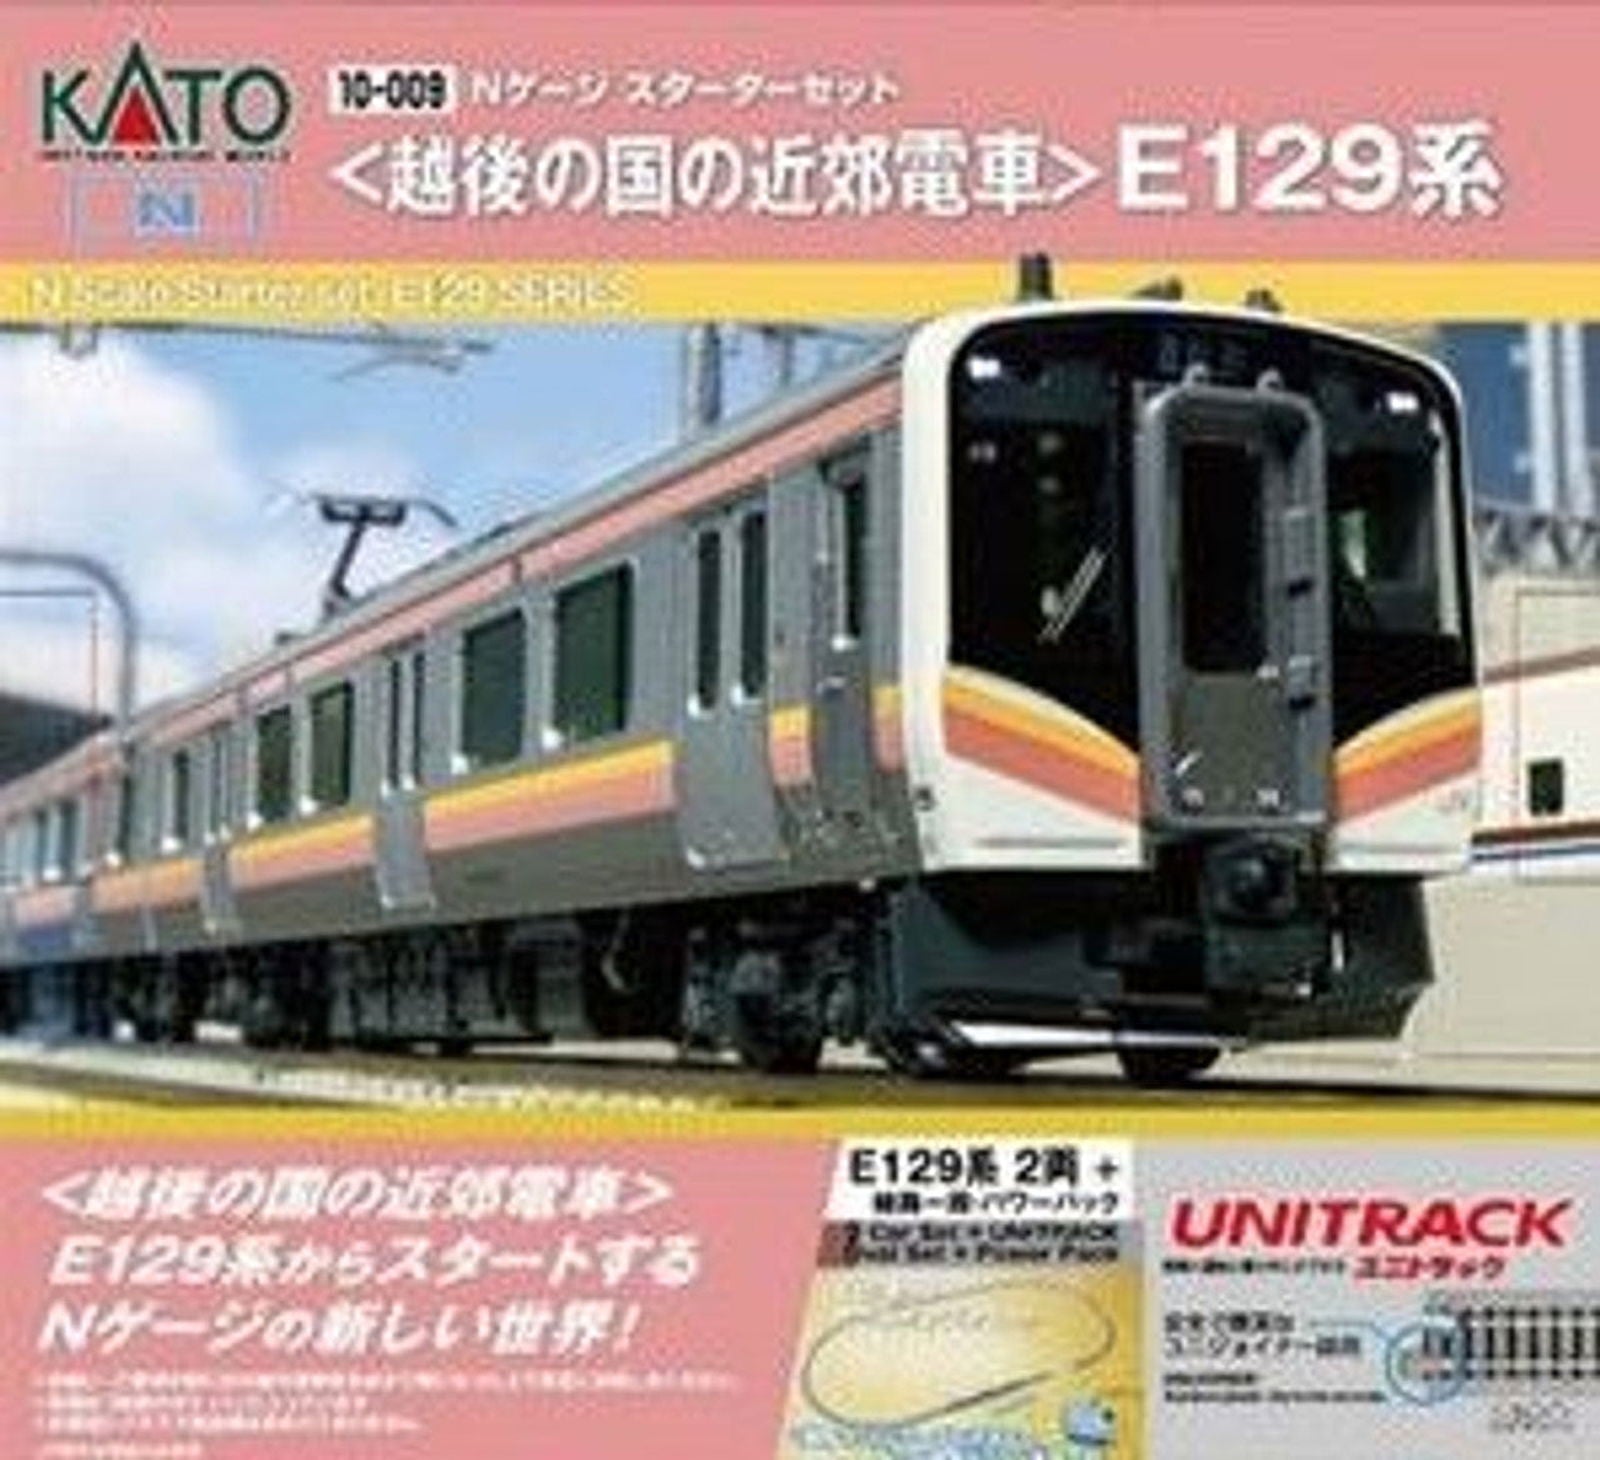 KATO 10-009 <Echigo Suburban Train> Series E129 Starter Set (2 Cars Set + Master 1 [M1]) (N scale) - BanzaiHobby